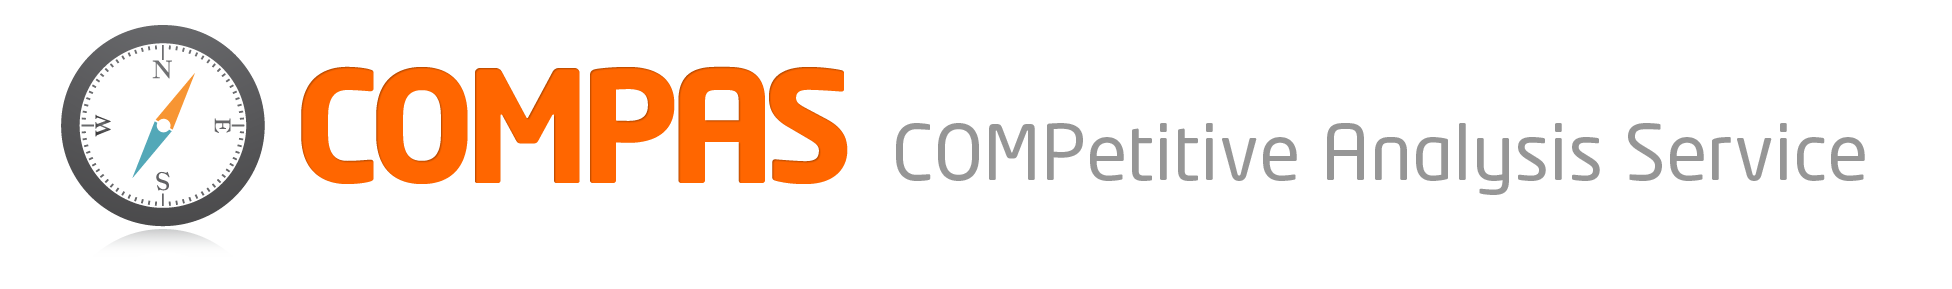 COMPAS 경쟁정보분석서비스